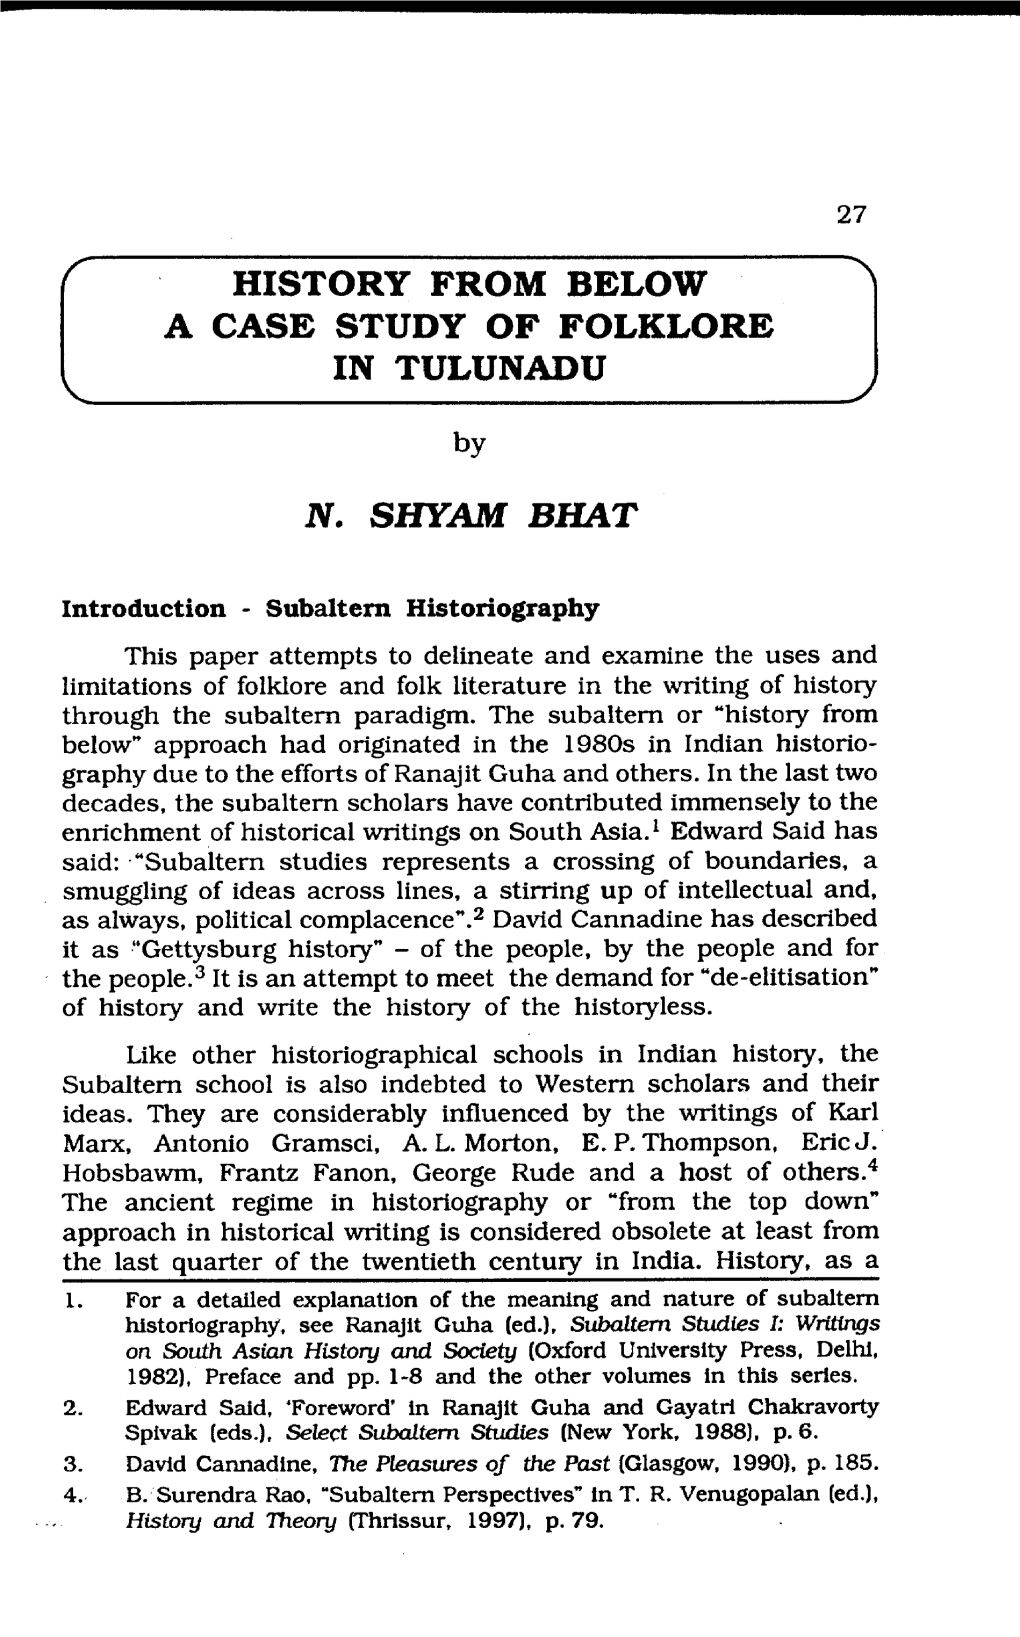 History from Below a Case Study of Folklore in Tulunadu